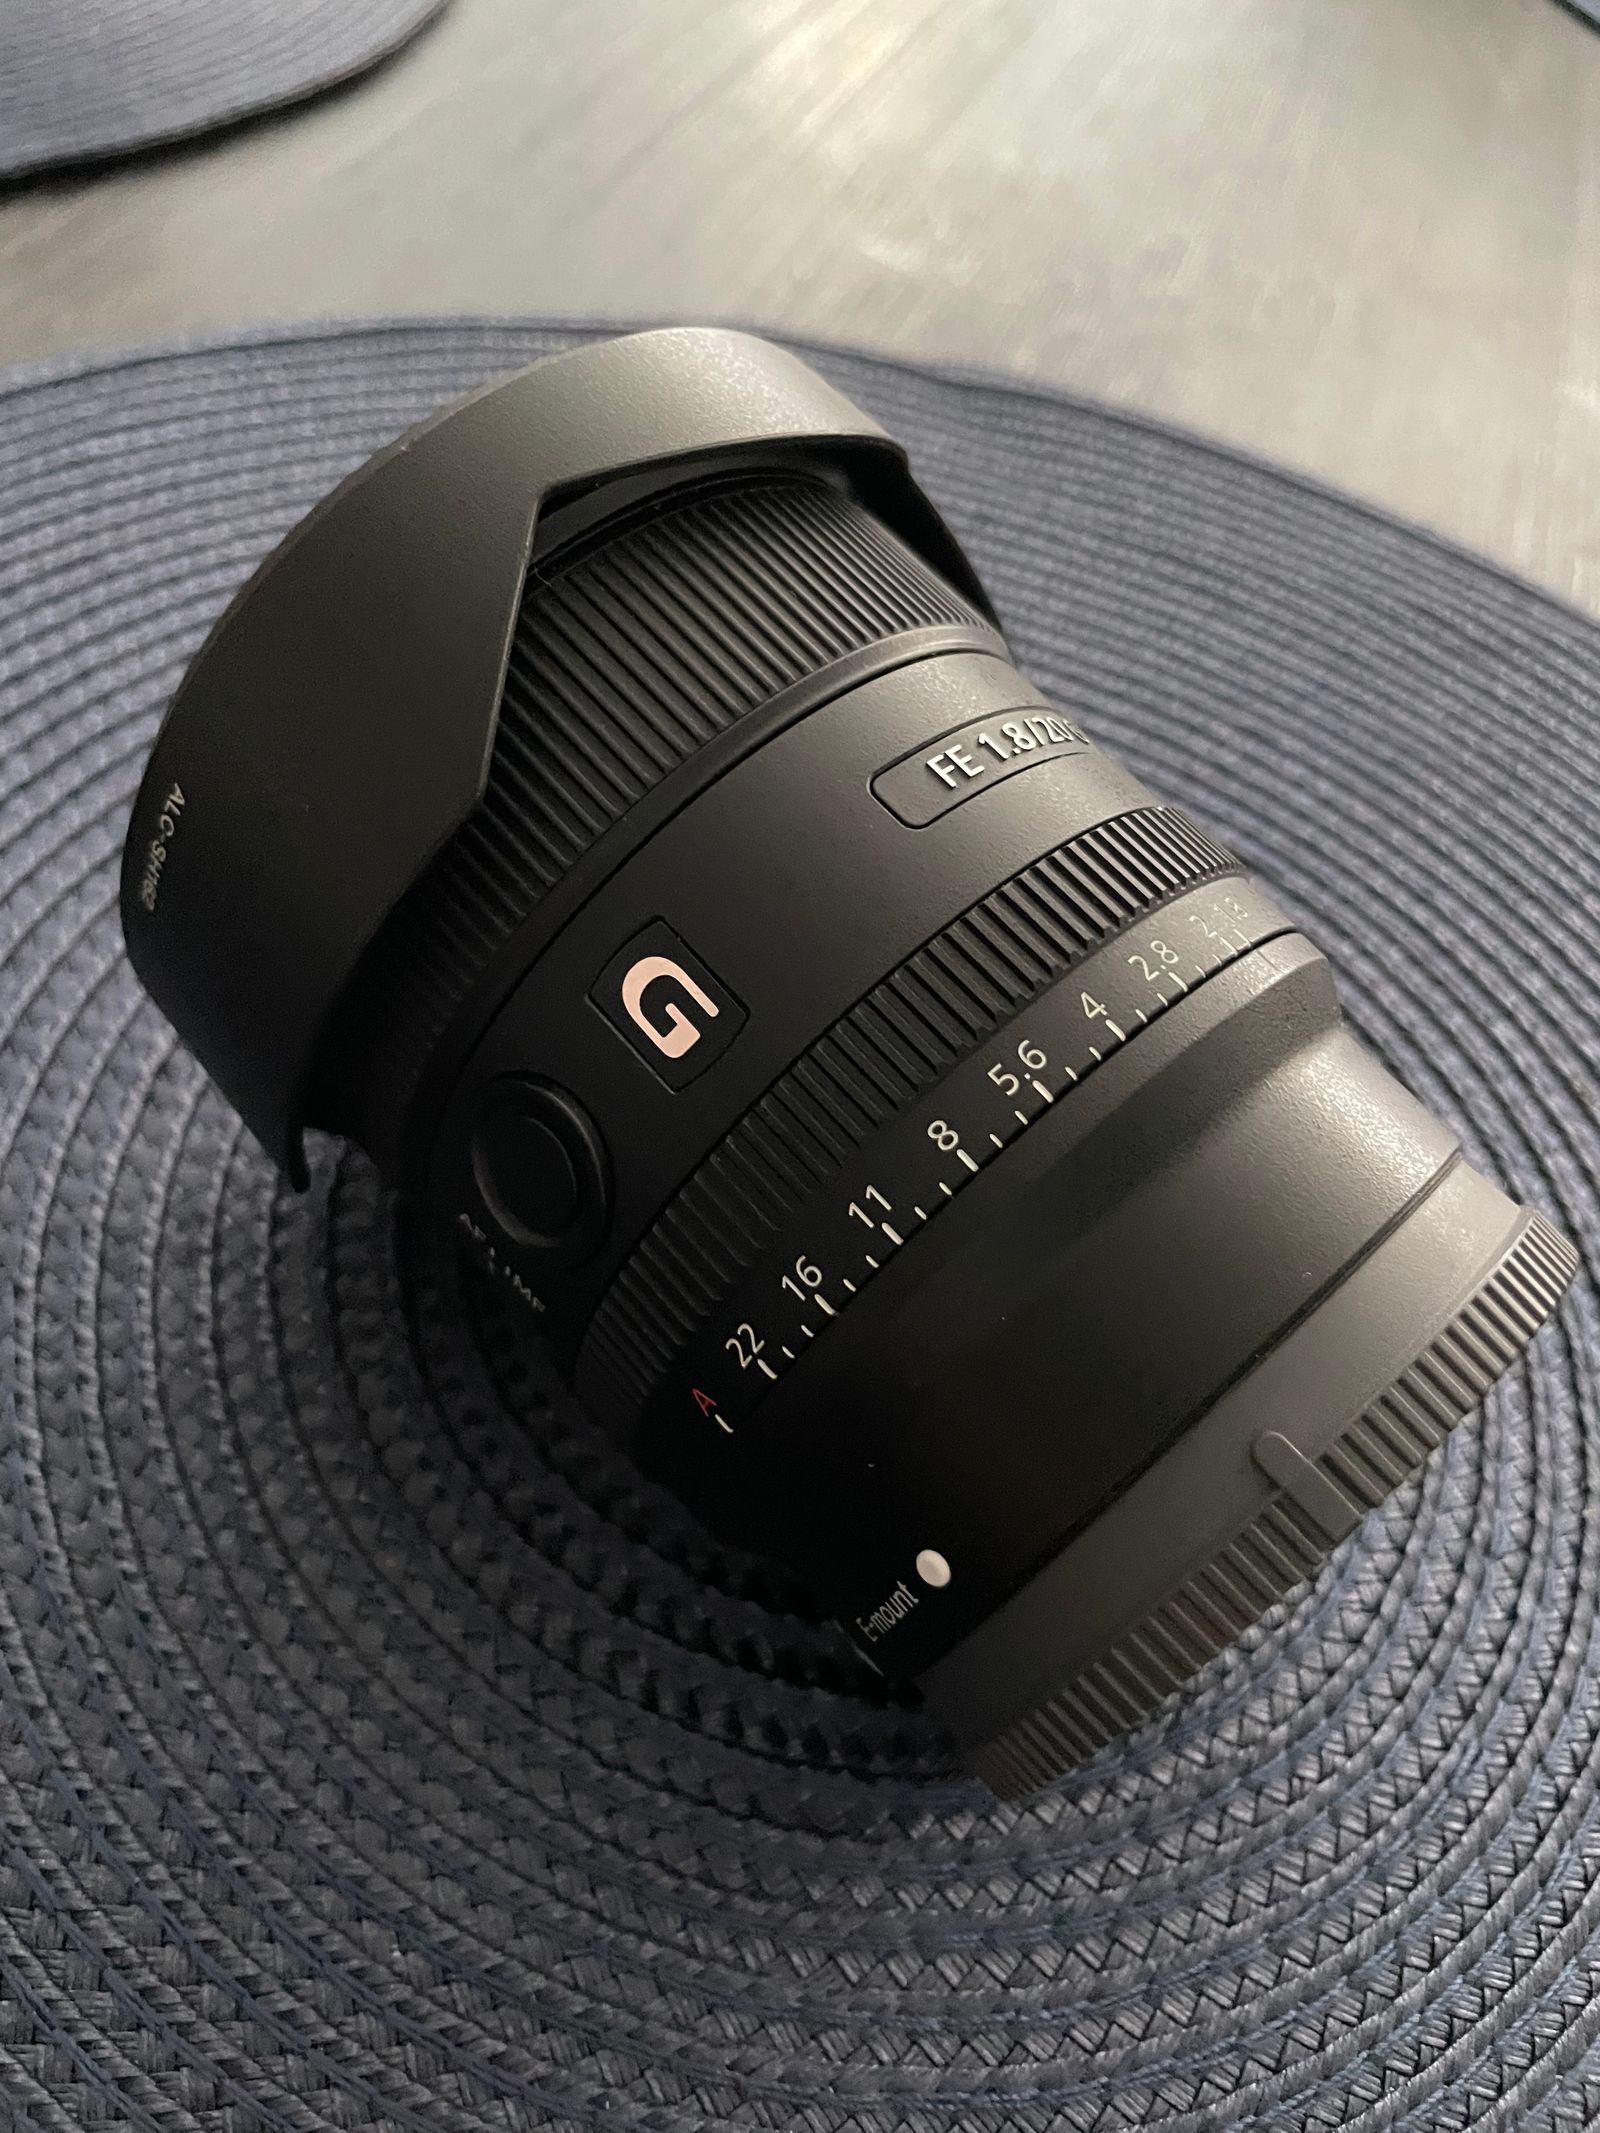 Sony FE 20mm f/1.8 G Lens From ZONE's Gear Shop On Gear Focus